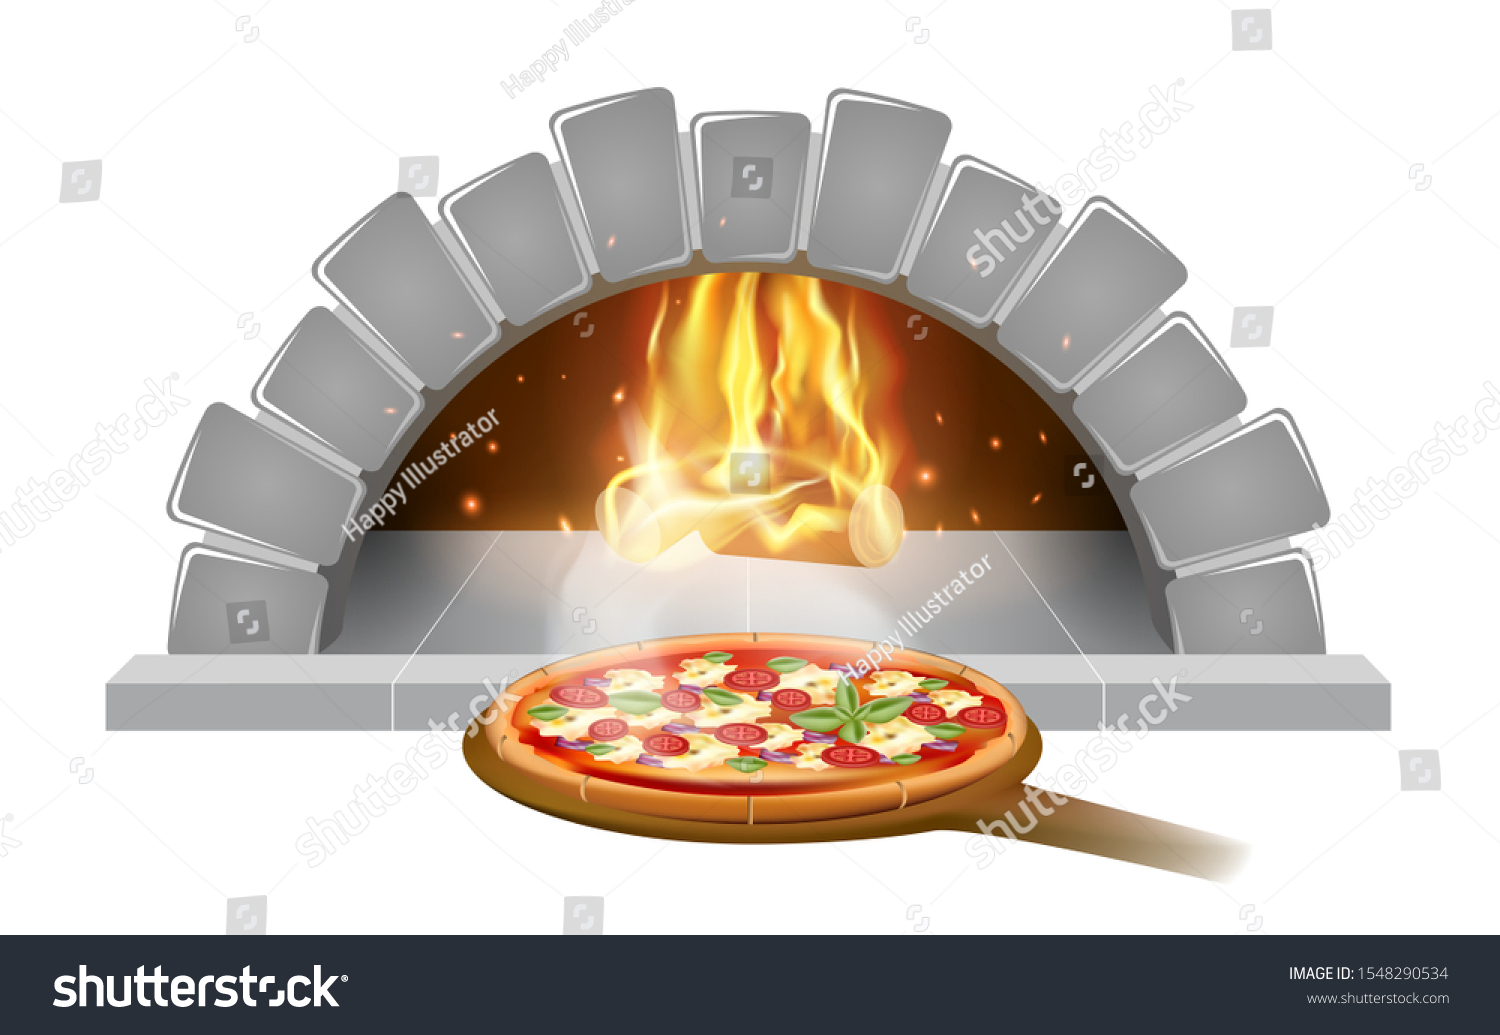 Brick Stone Oven Pizza Illustration Emblem Stock Vector Royalty Free